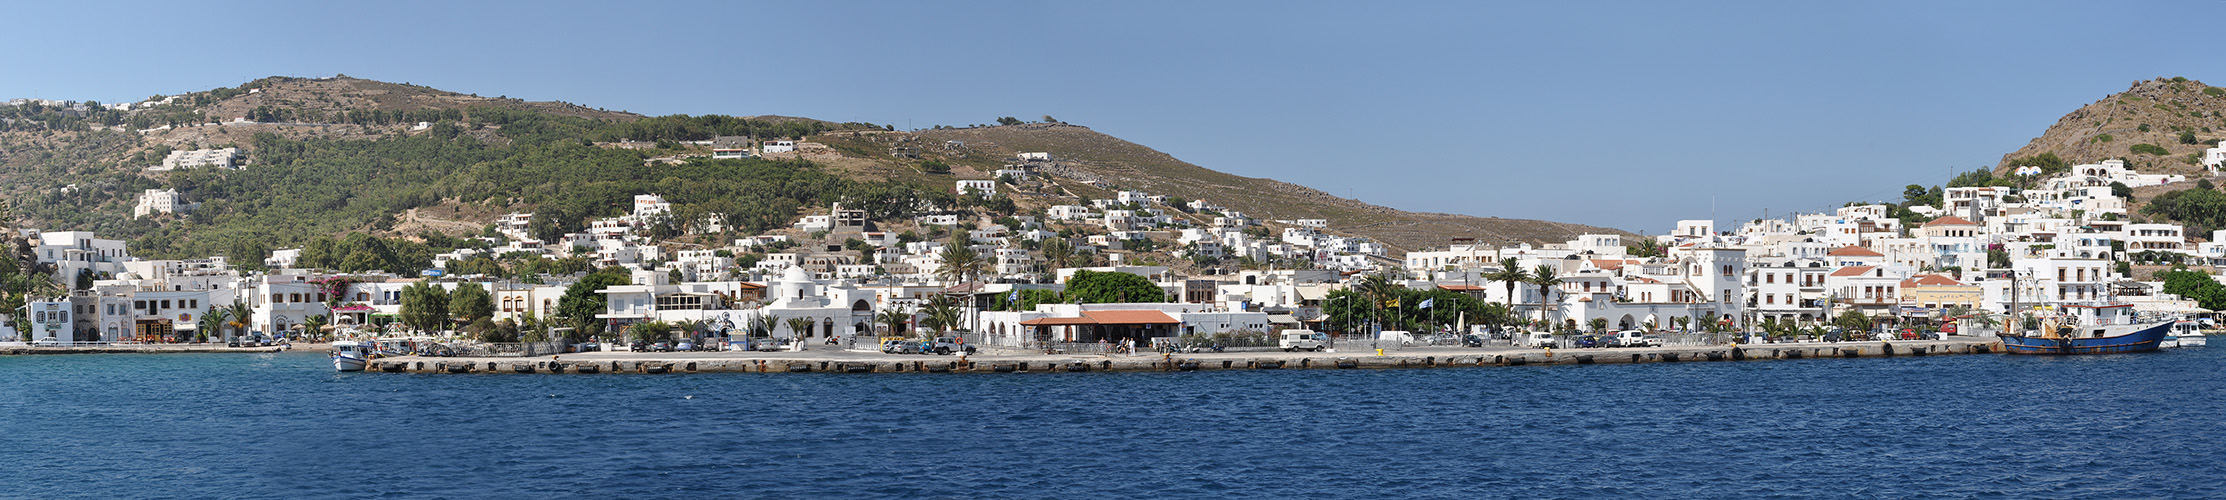 Skala auf Patmos